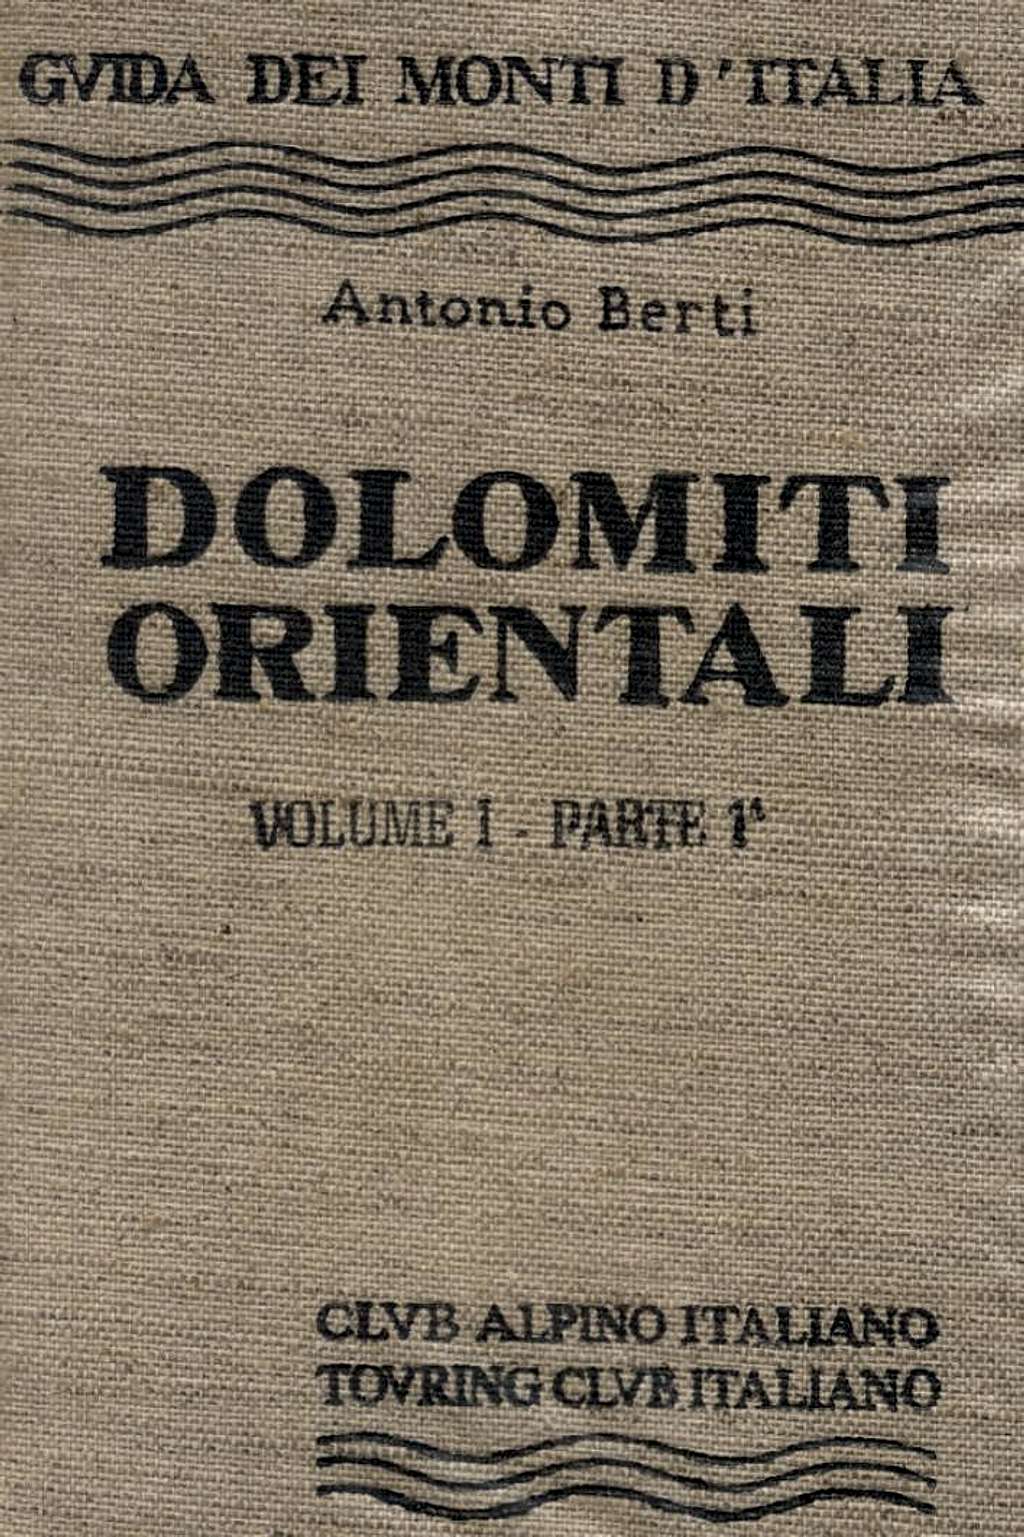 Dolomiti Orientali Guidebook